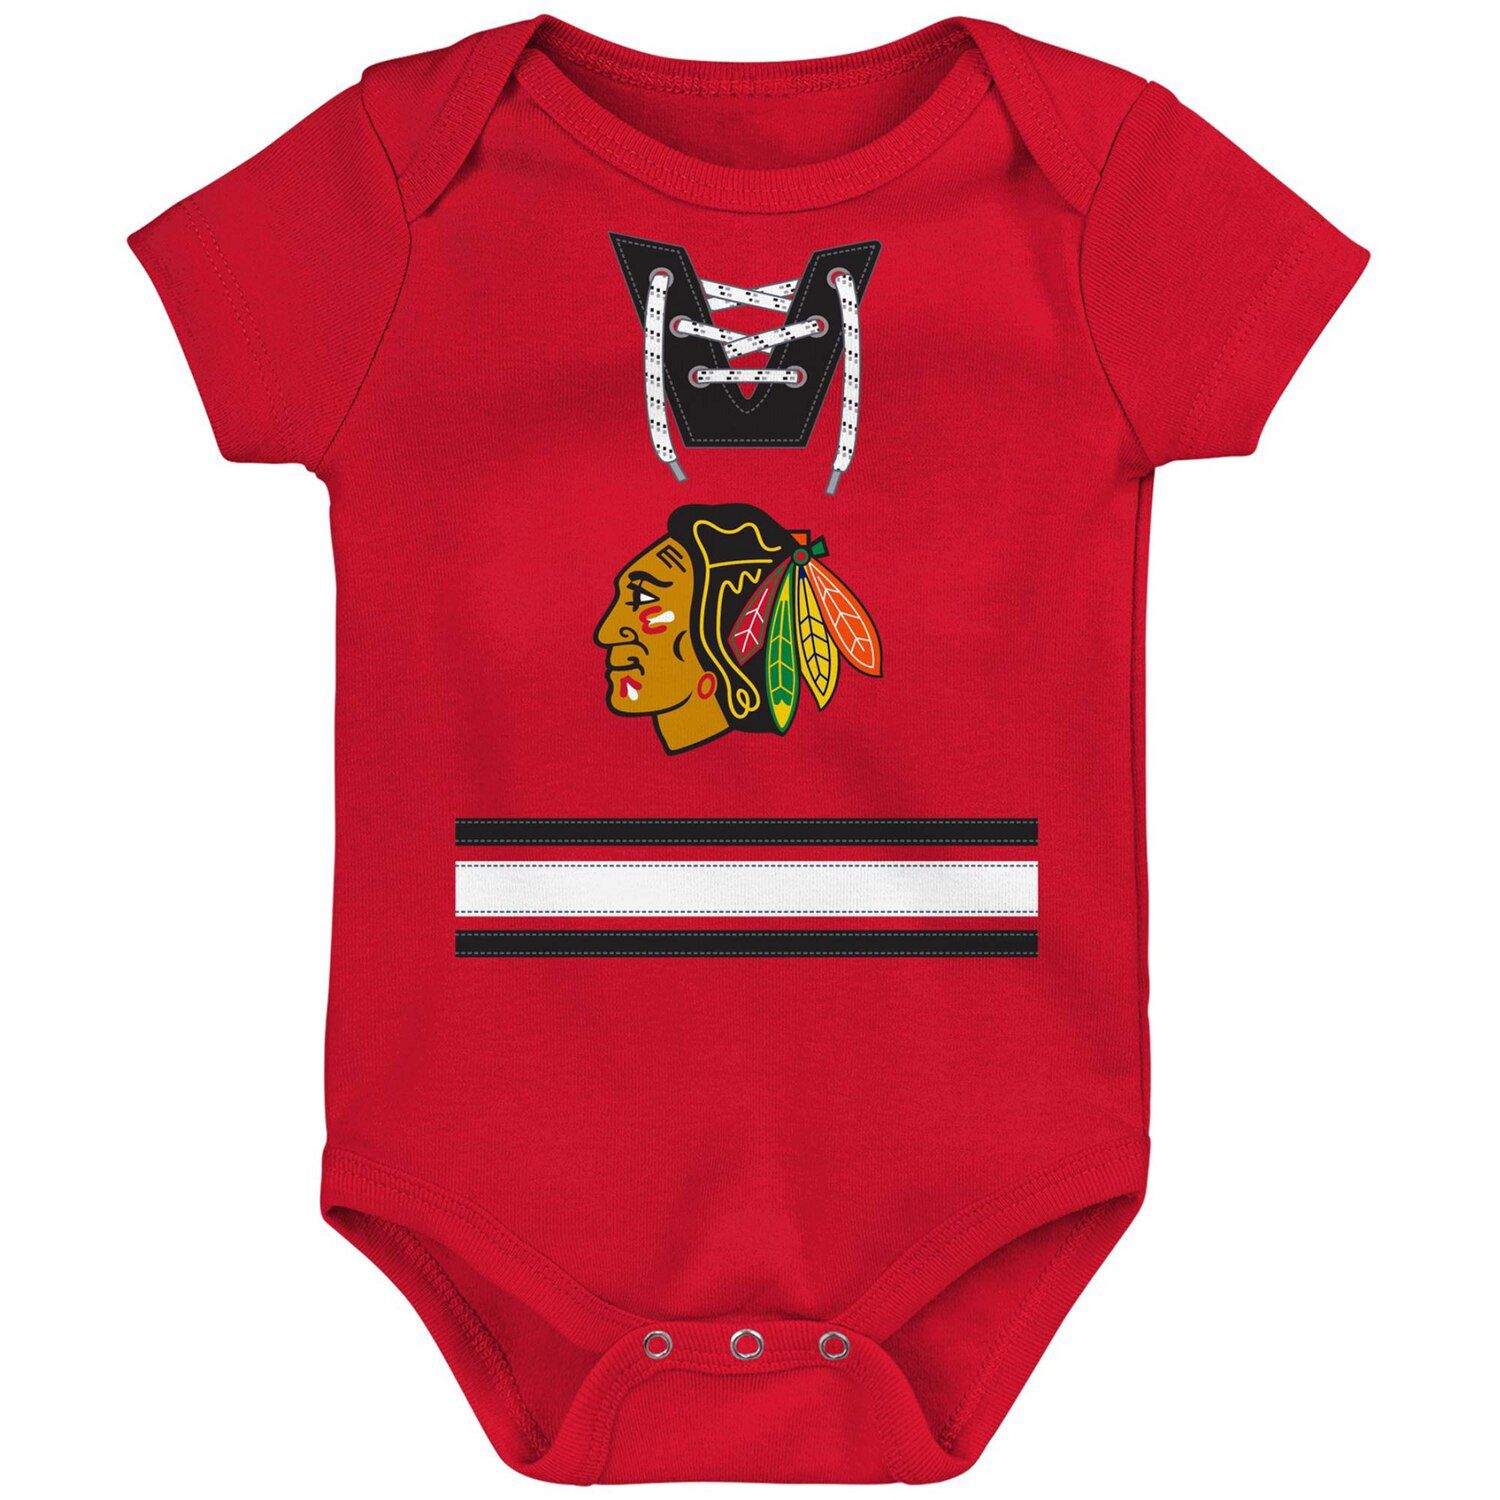 infant blackhawks jersey